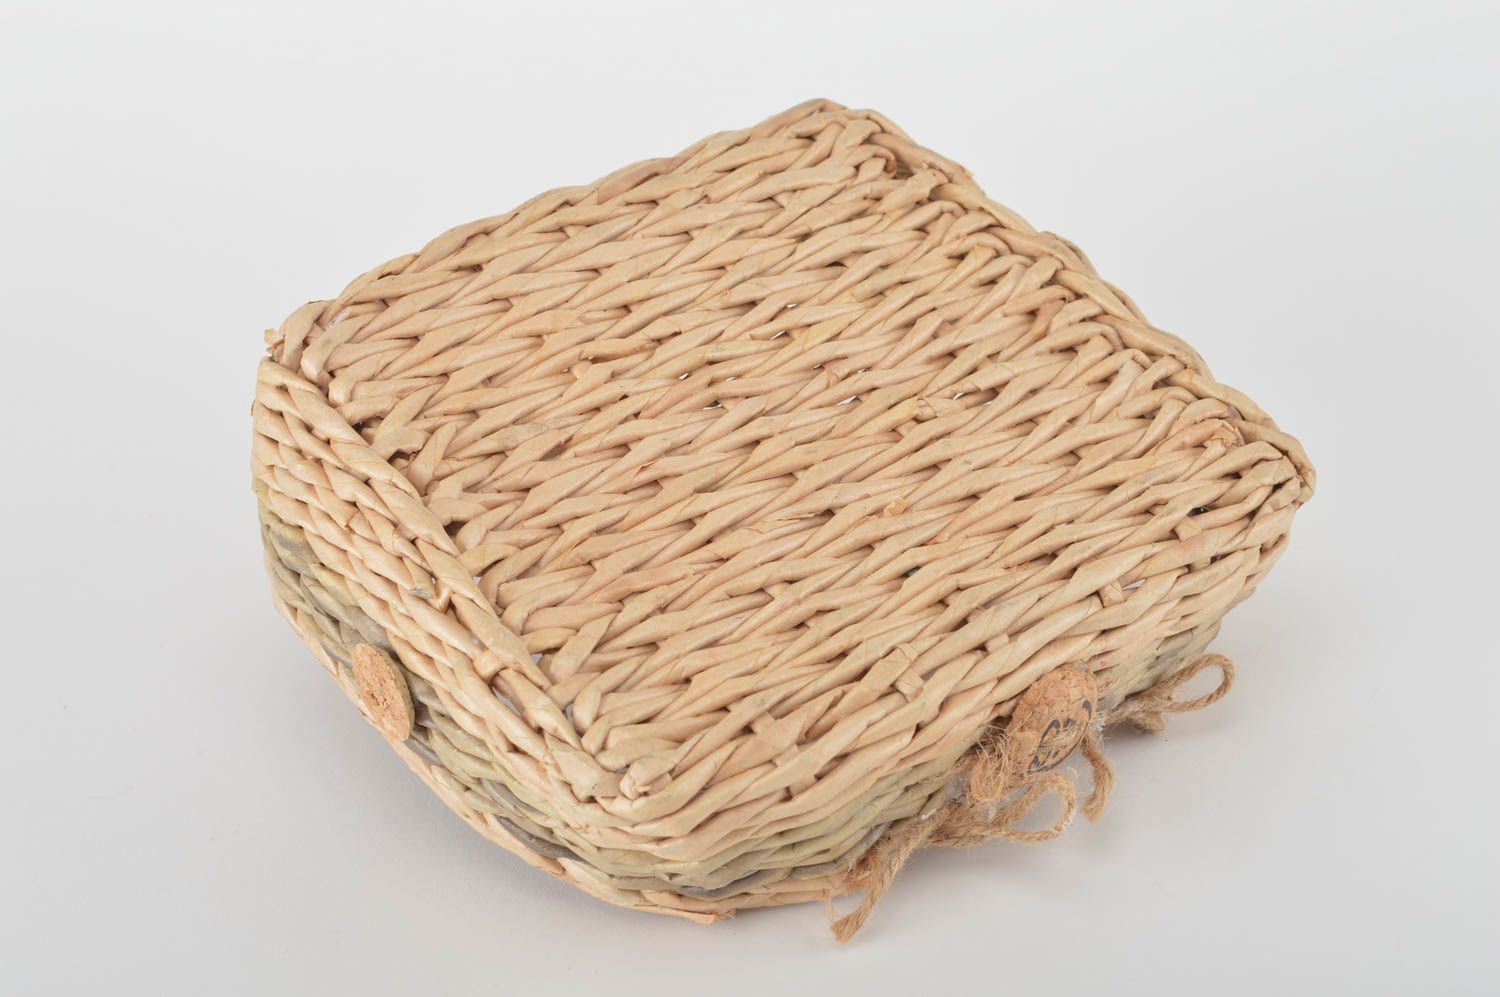 Unusual handmade paper basket decorative woven basket bedroom designs gift ideas photo 5